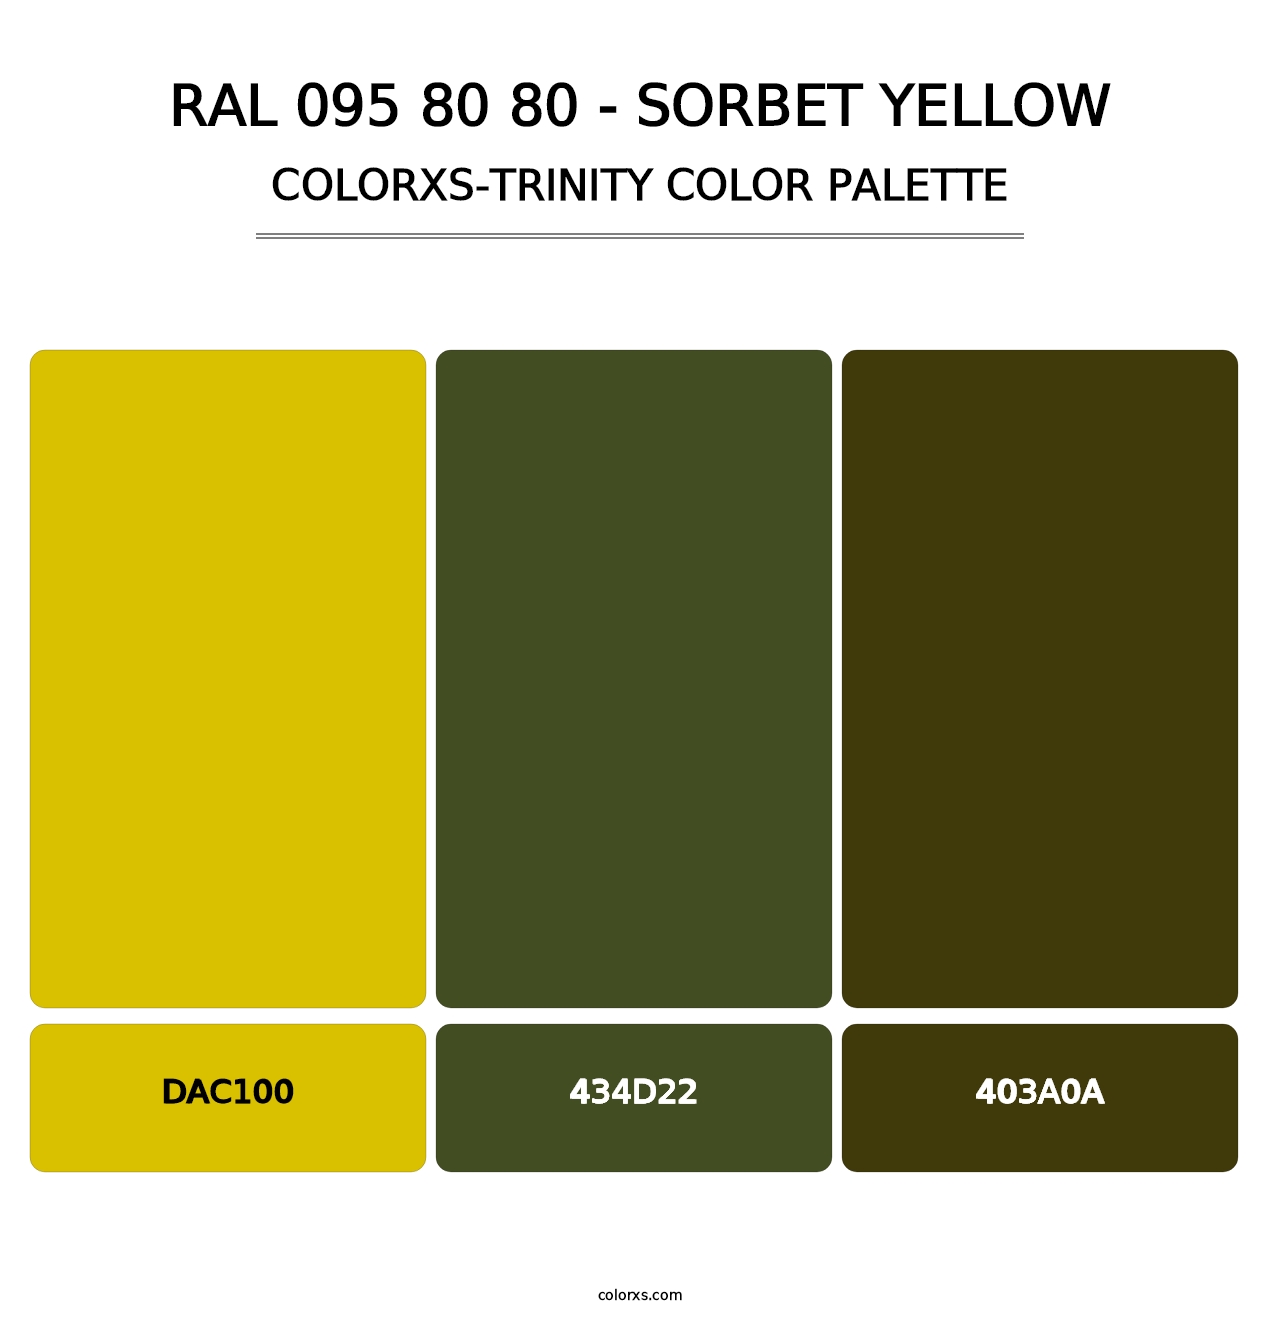 RAL 095 80 80 - Sorbet Yellow - Colorxs Trinity Palette